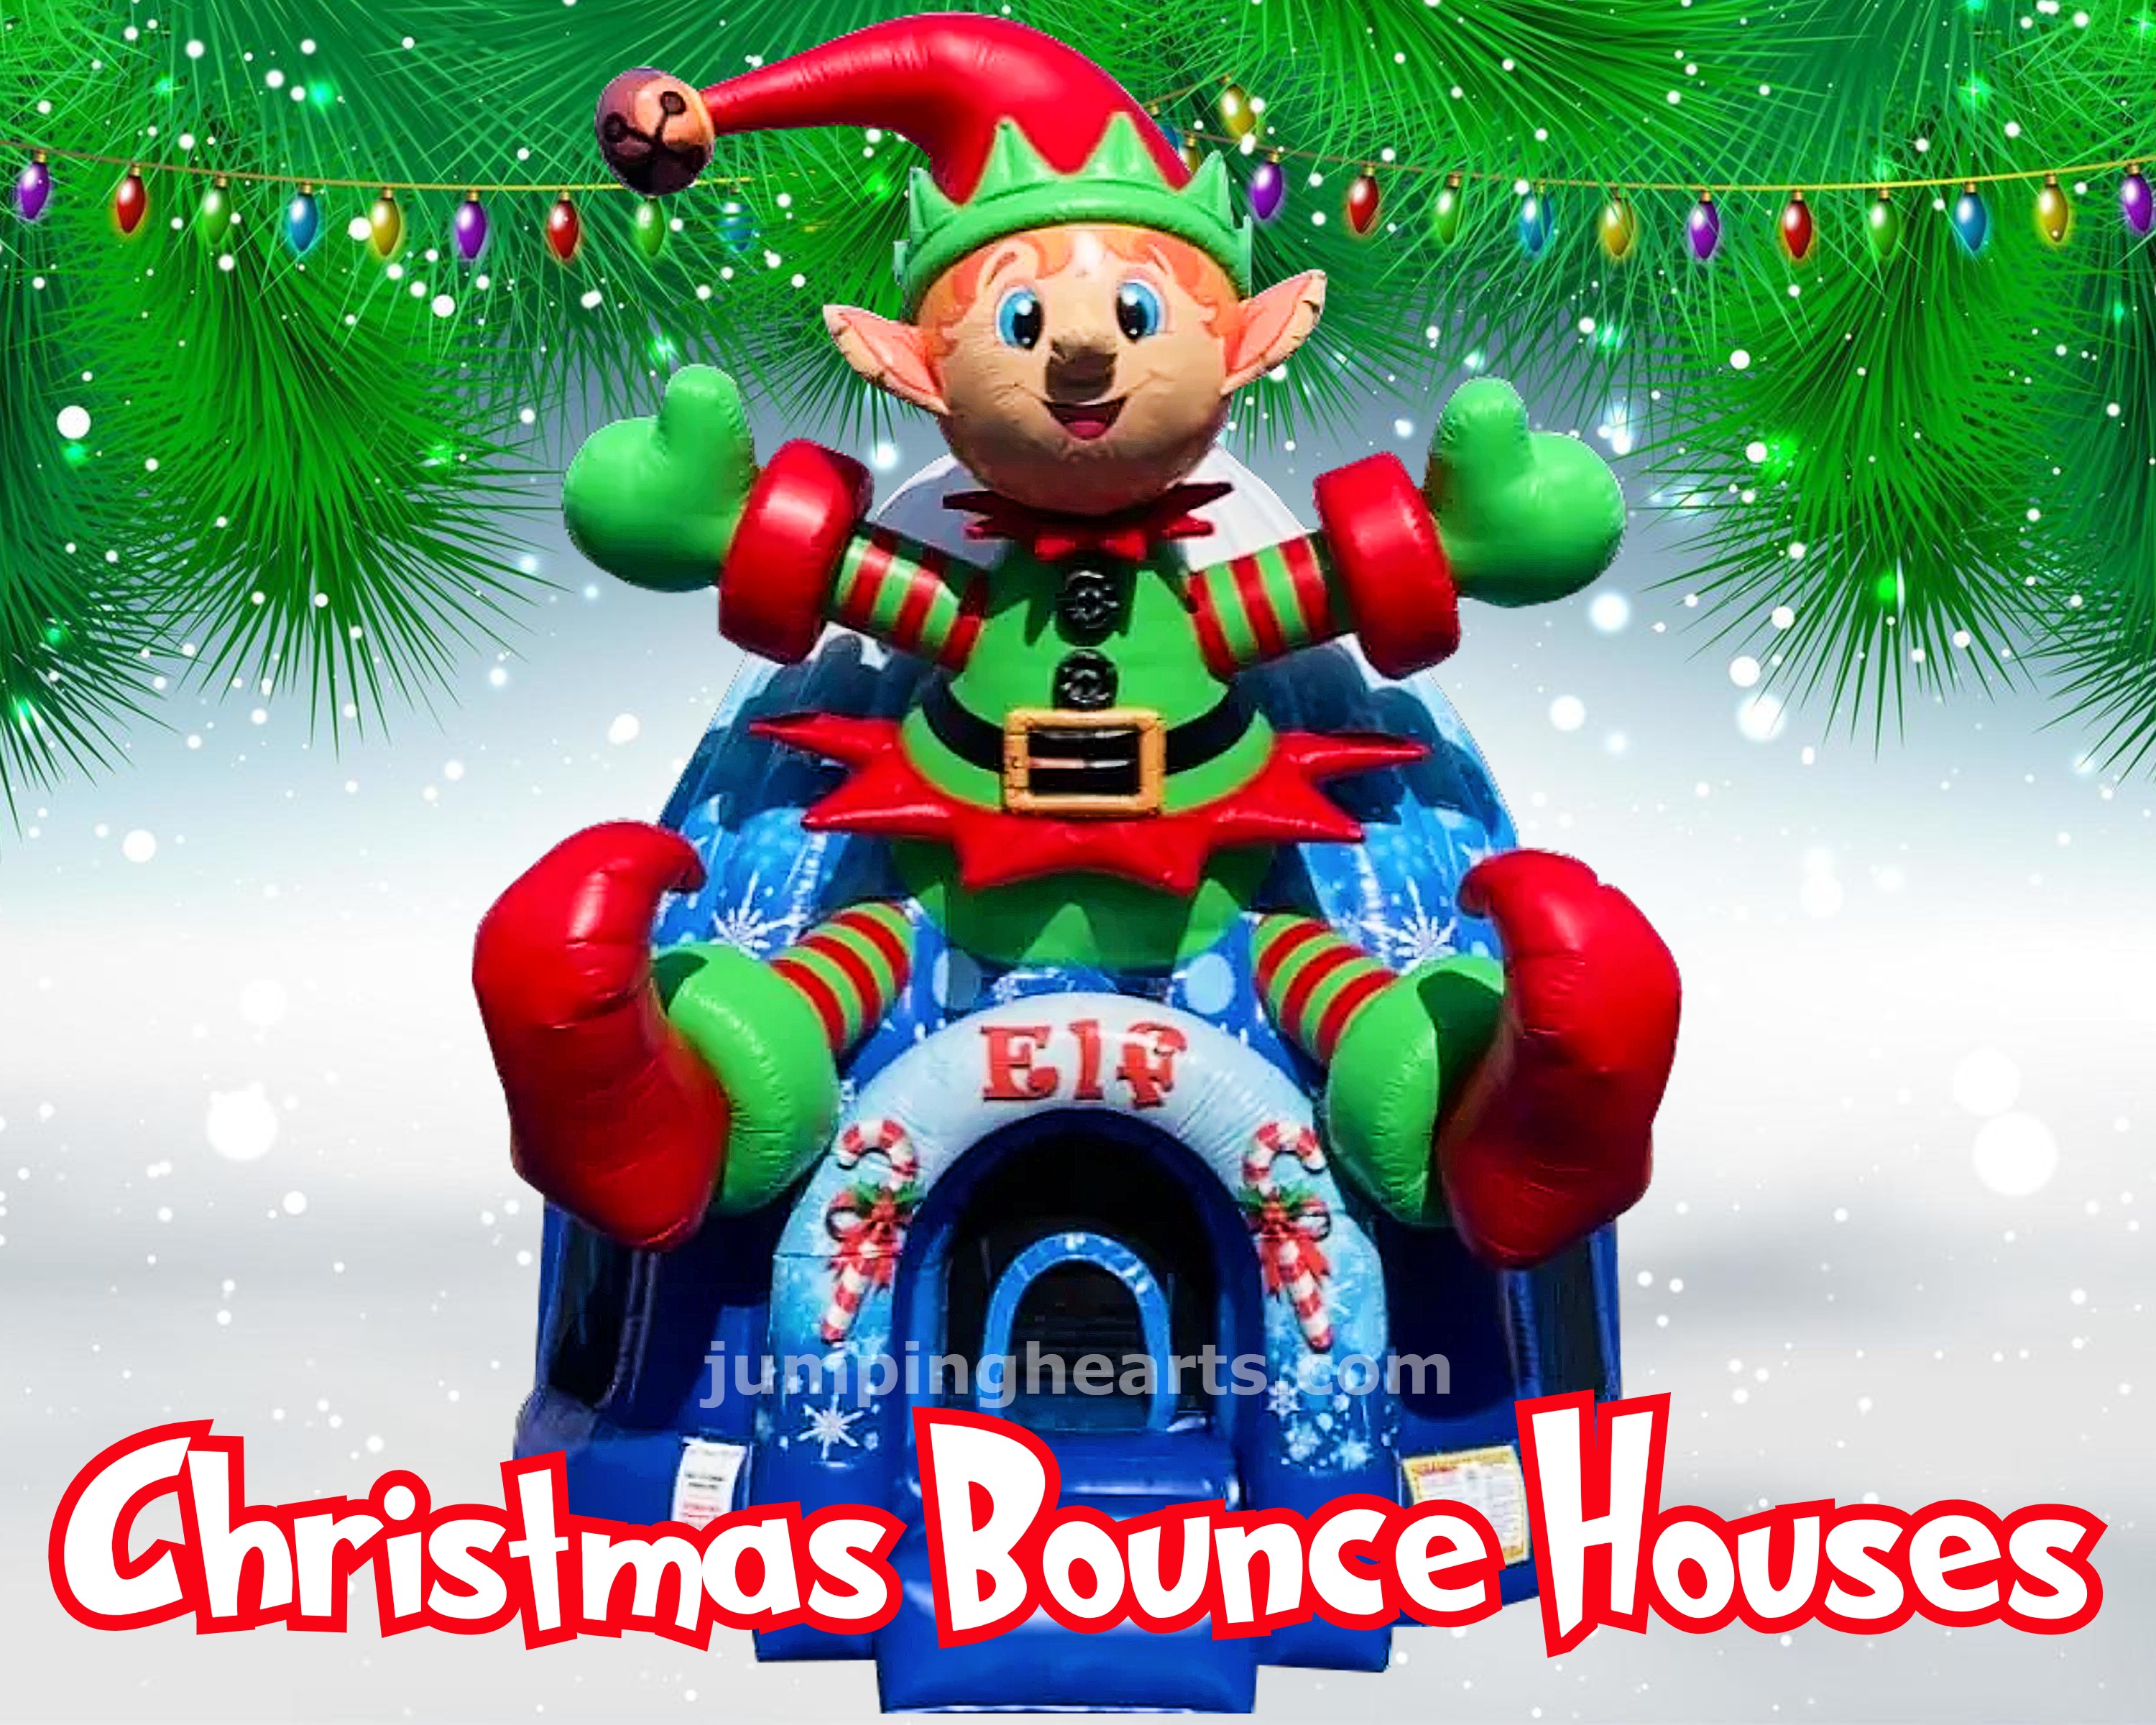 Christmas bounce house rentals Nashville | Jumping Hearts Party Rentals Nashville